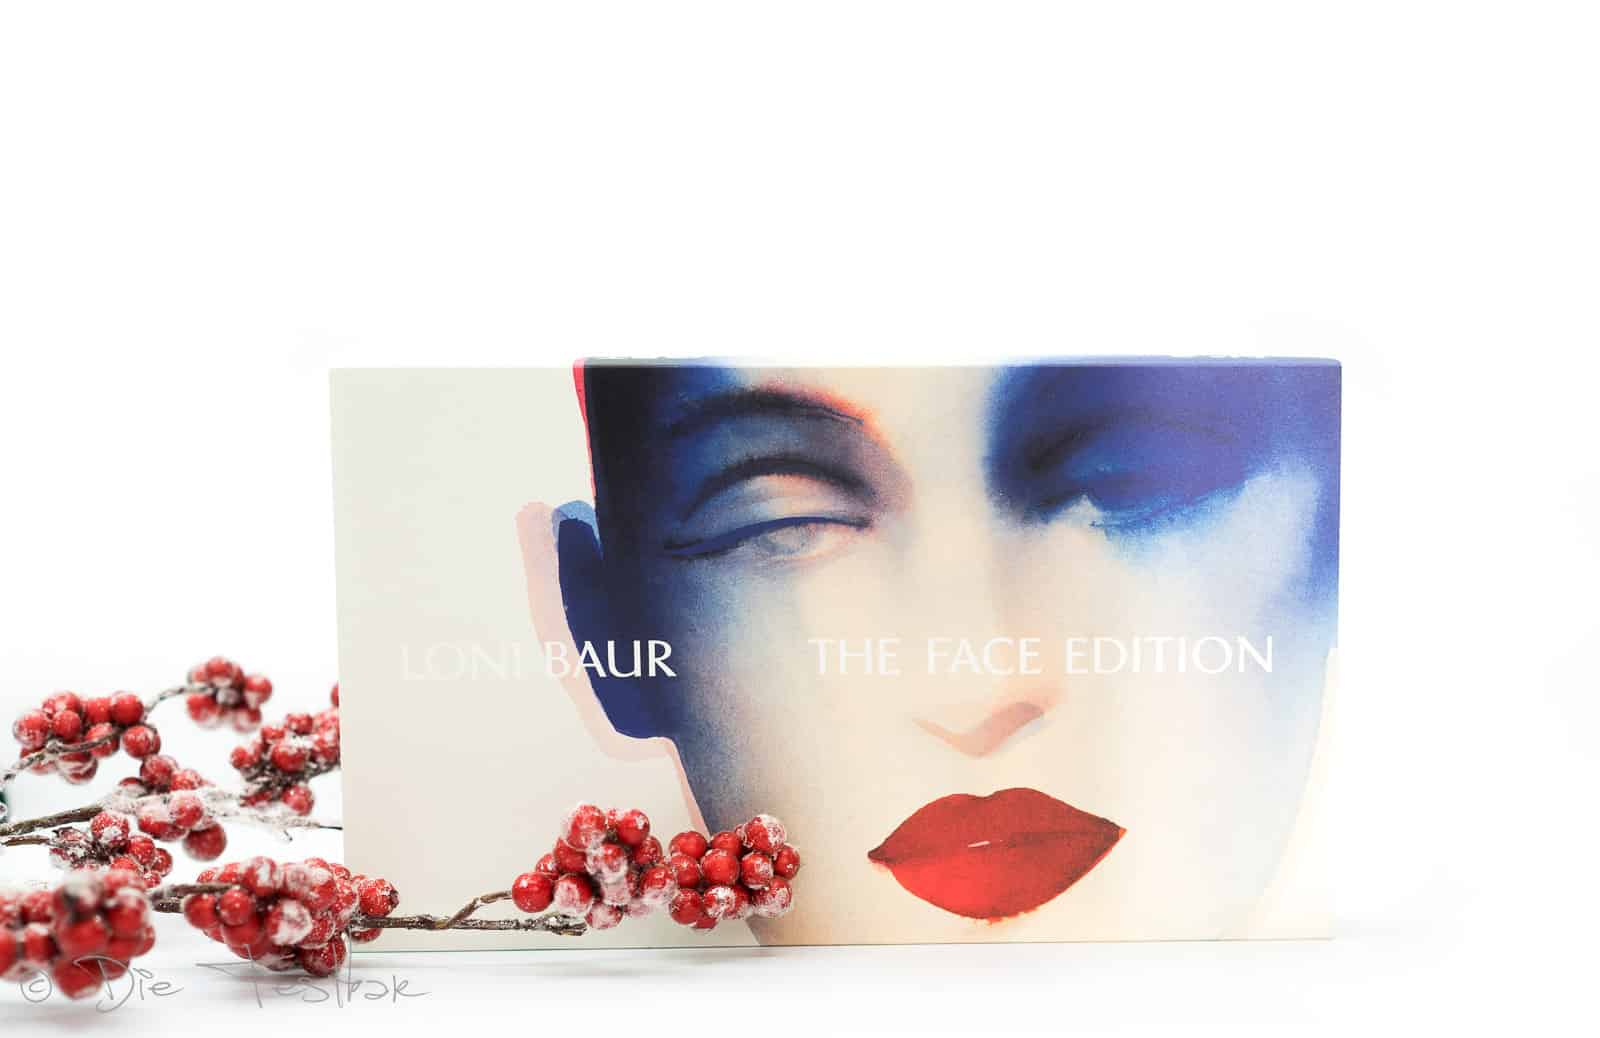 Make-up-Artist in Palettenform – Full-Look-Palette – THE FACE EDITION No 2 - Get reddy von LONI BAUR